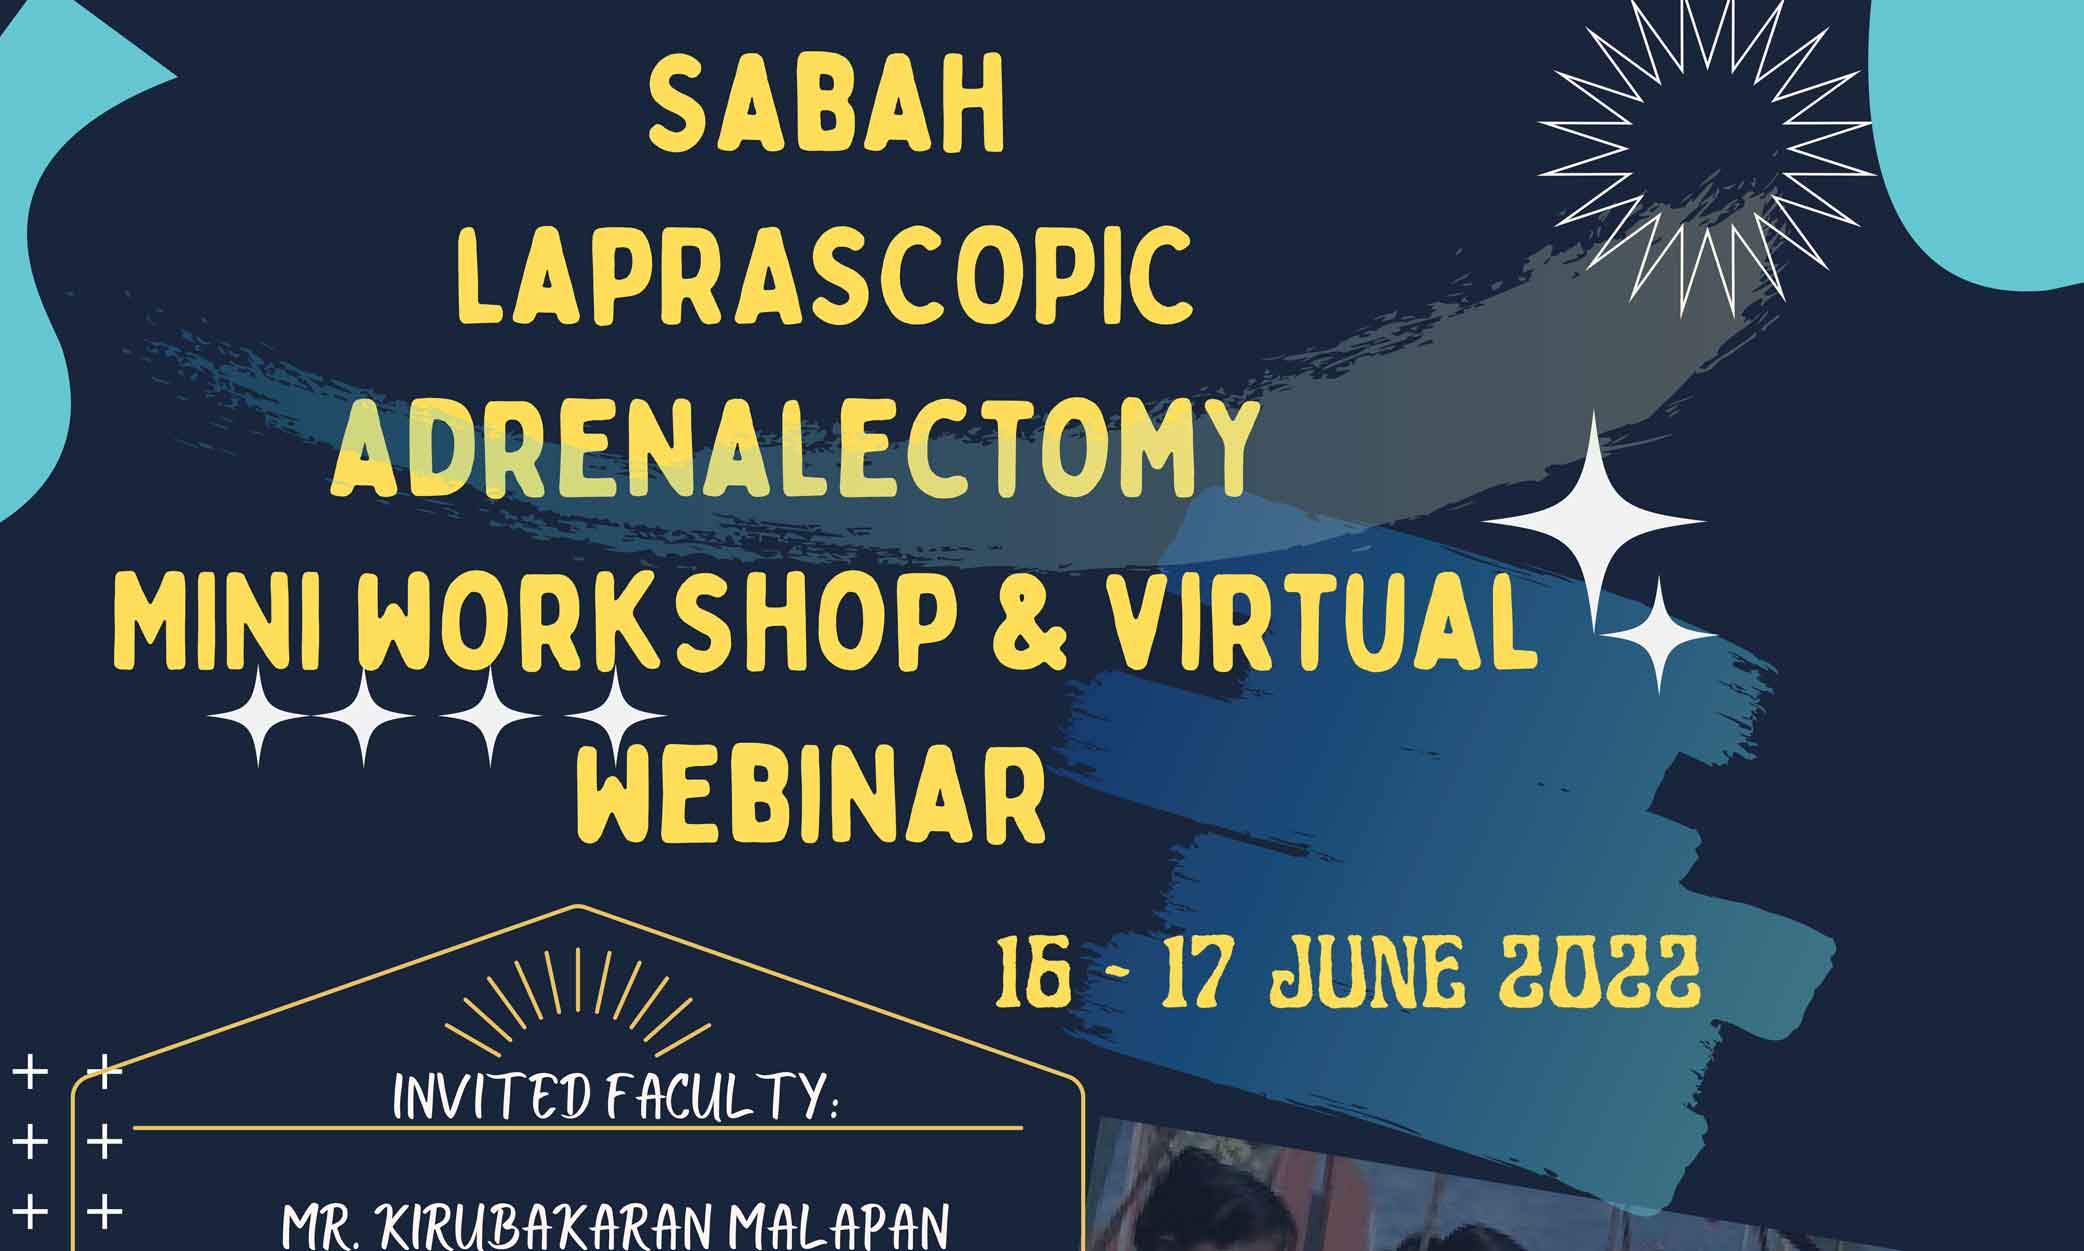 Sabah Laparoscopic Adrenalectomy Mini Workshop and Virtual Webinar. 